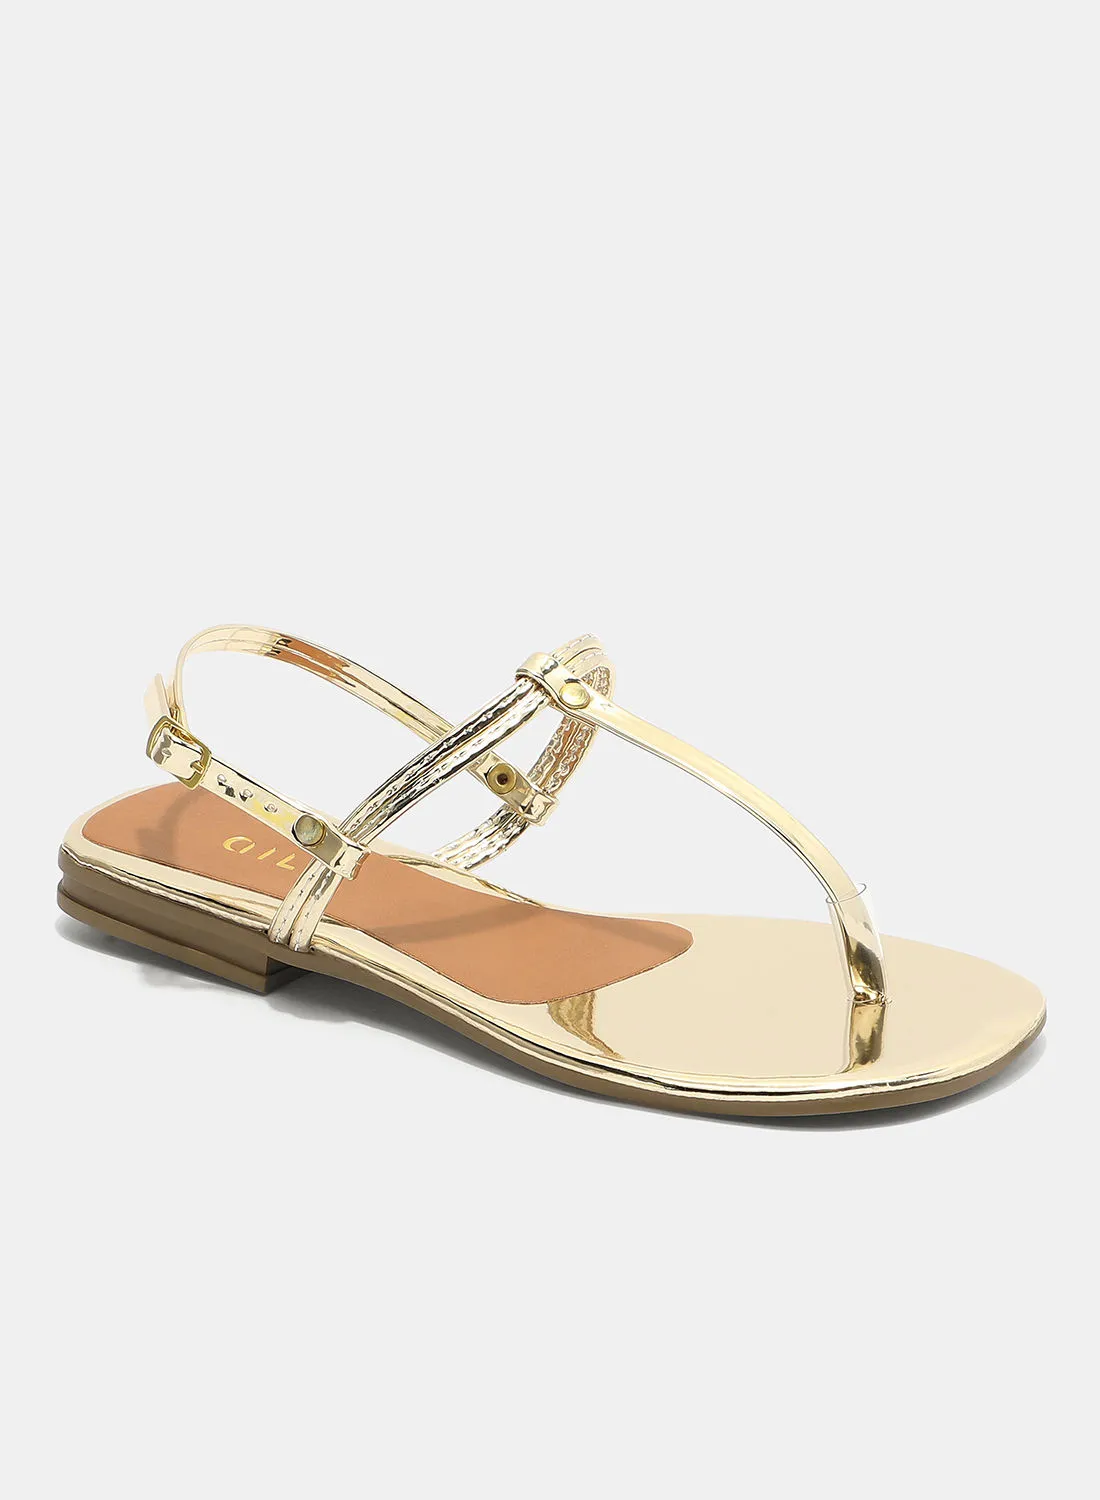 Aila Casual Plain Flat Sandals Gold